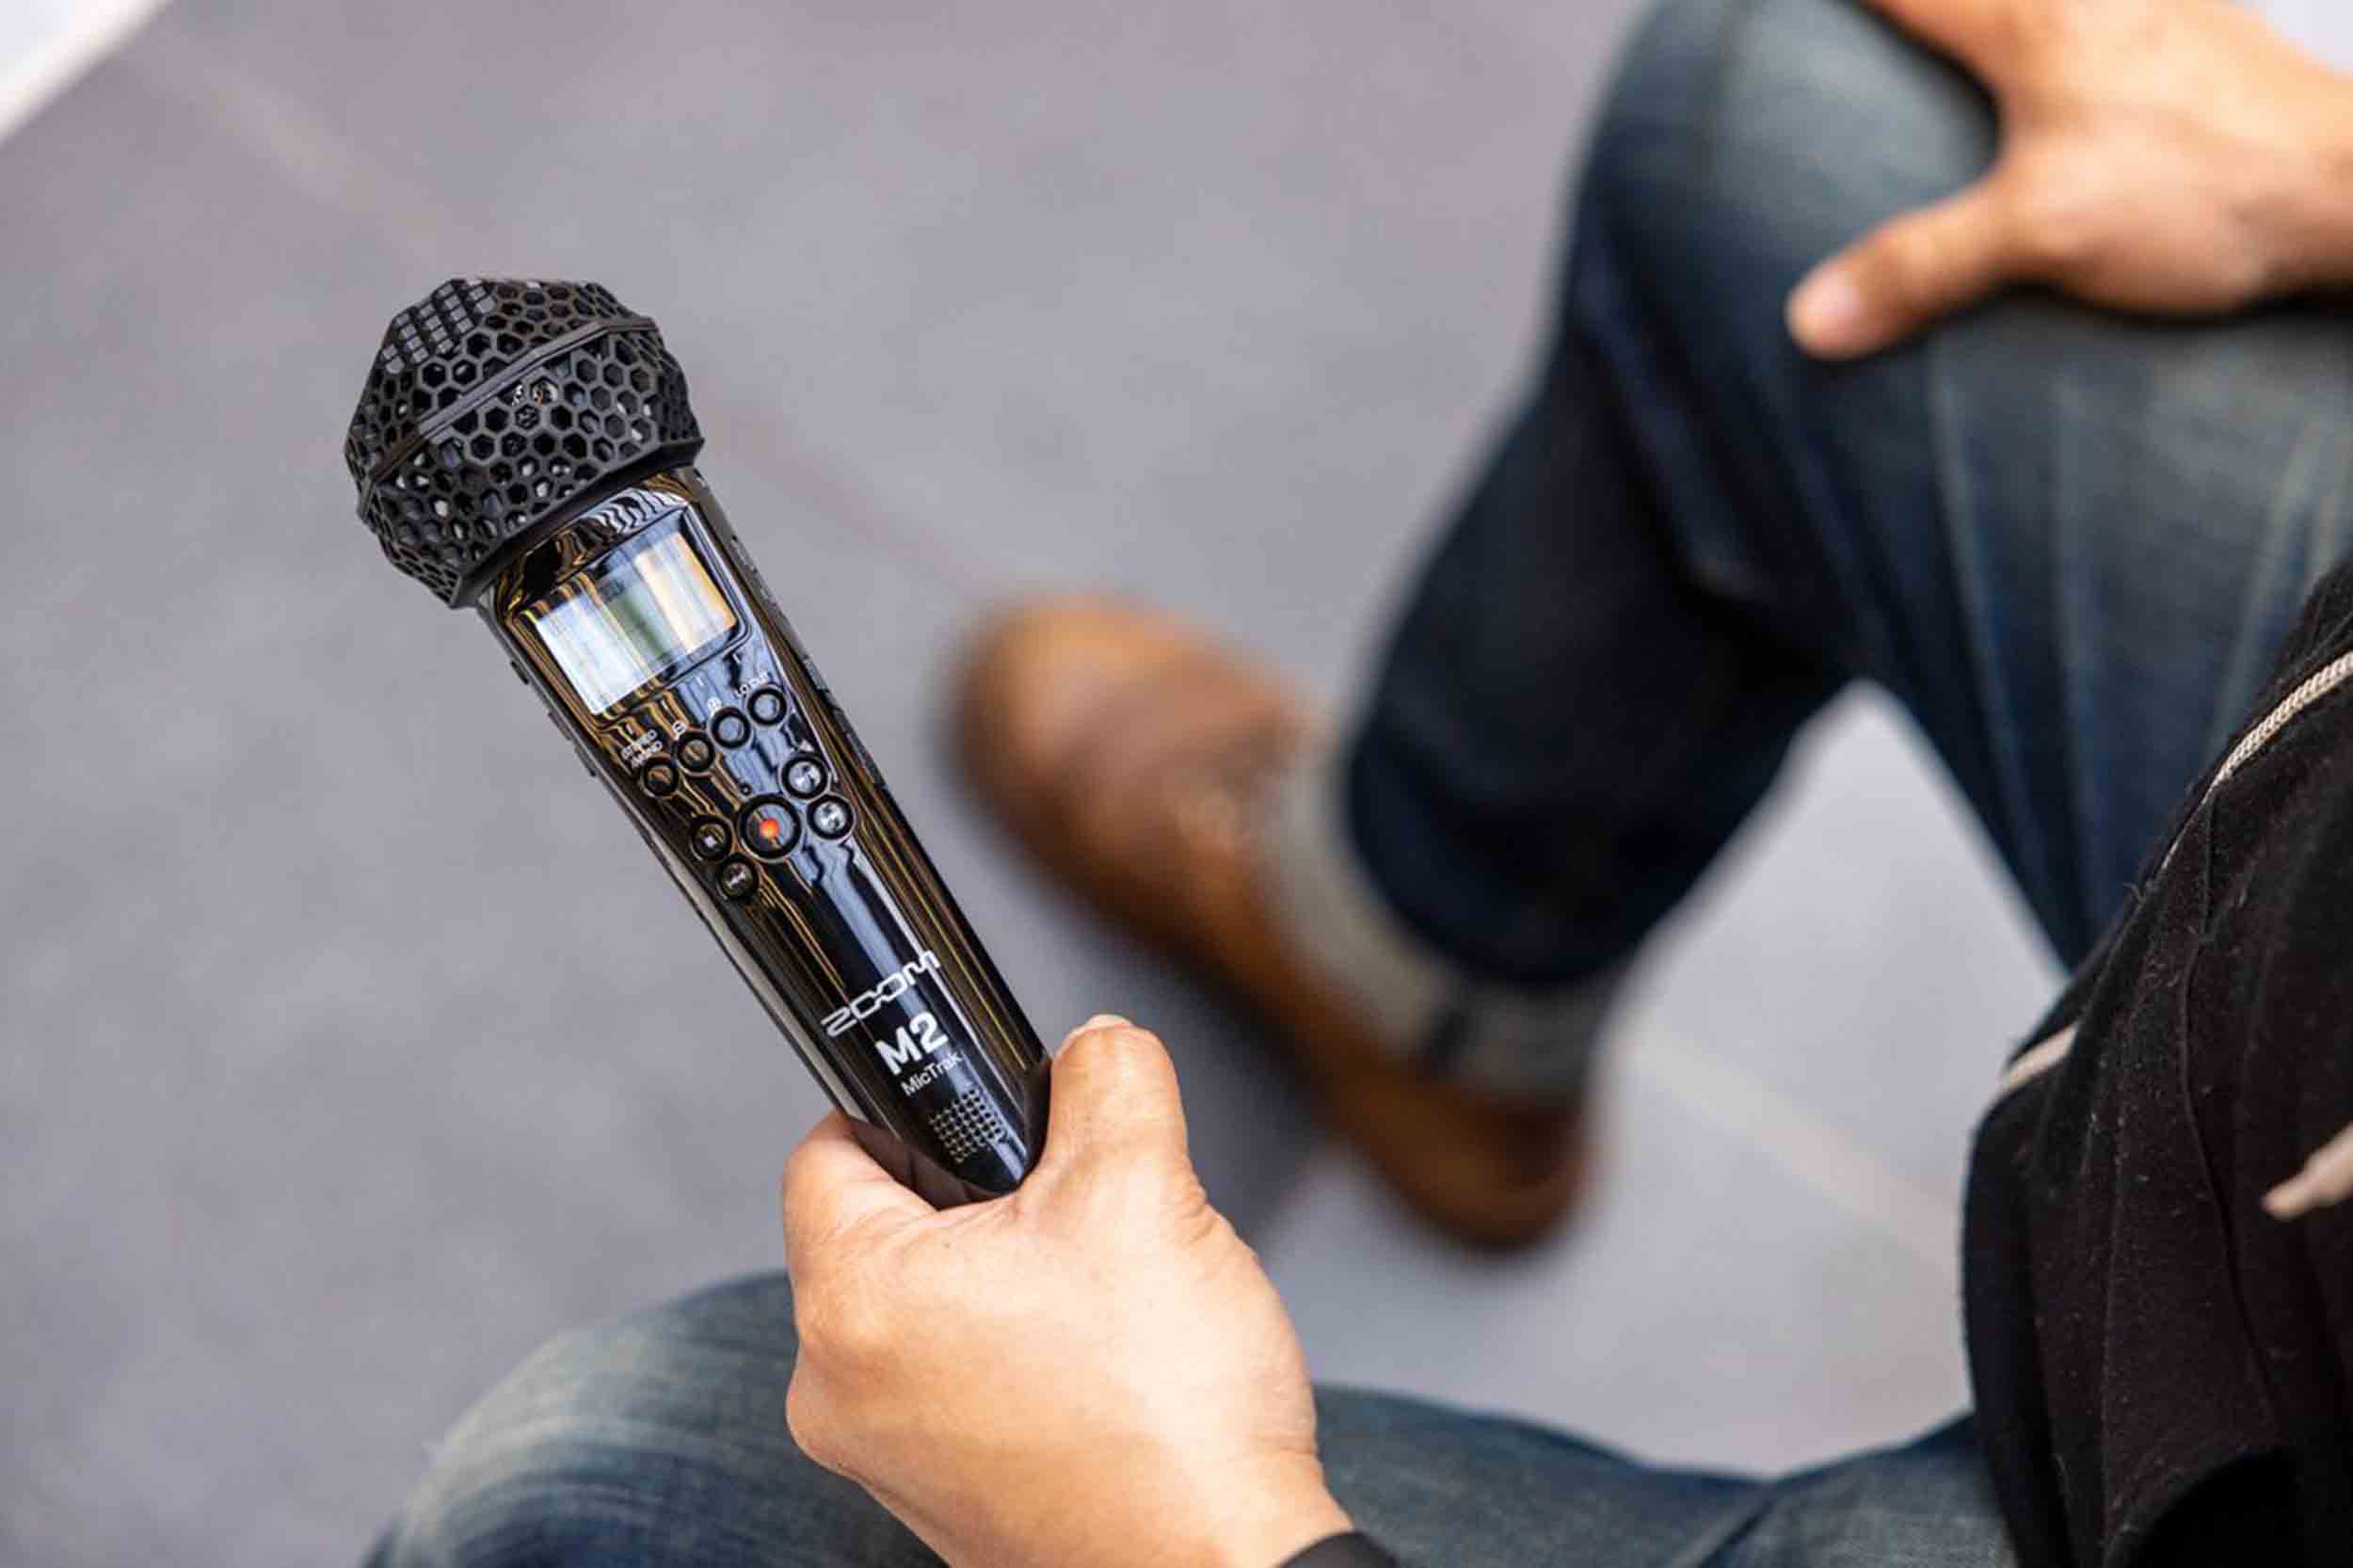 Zoom M2 MicTrak Stereo 32-bit Handheld Microphone Recorder - Hollywood DJ